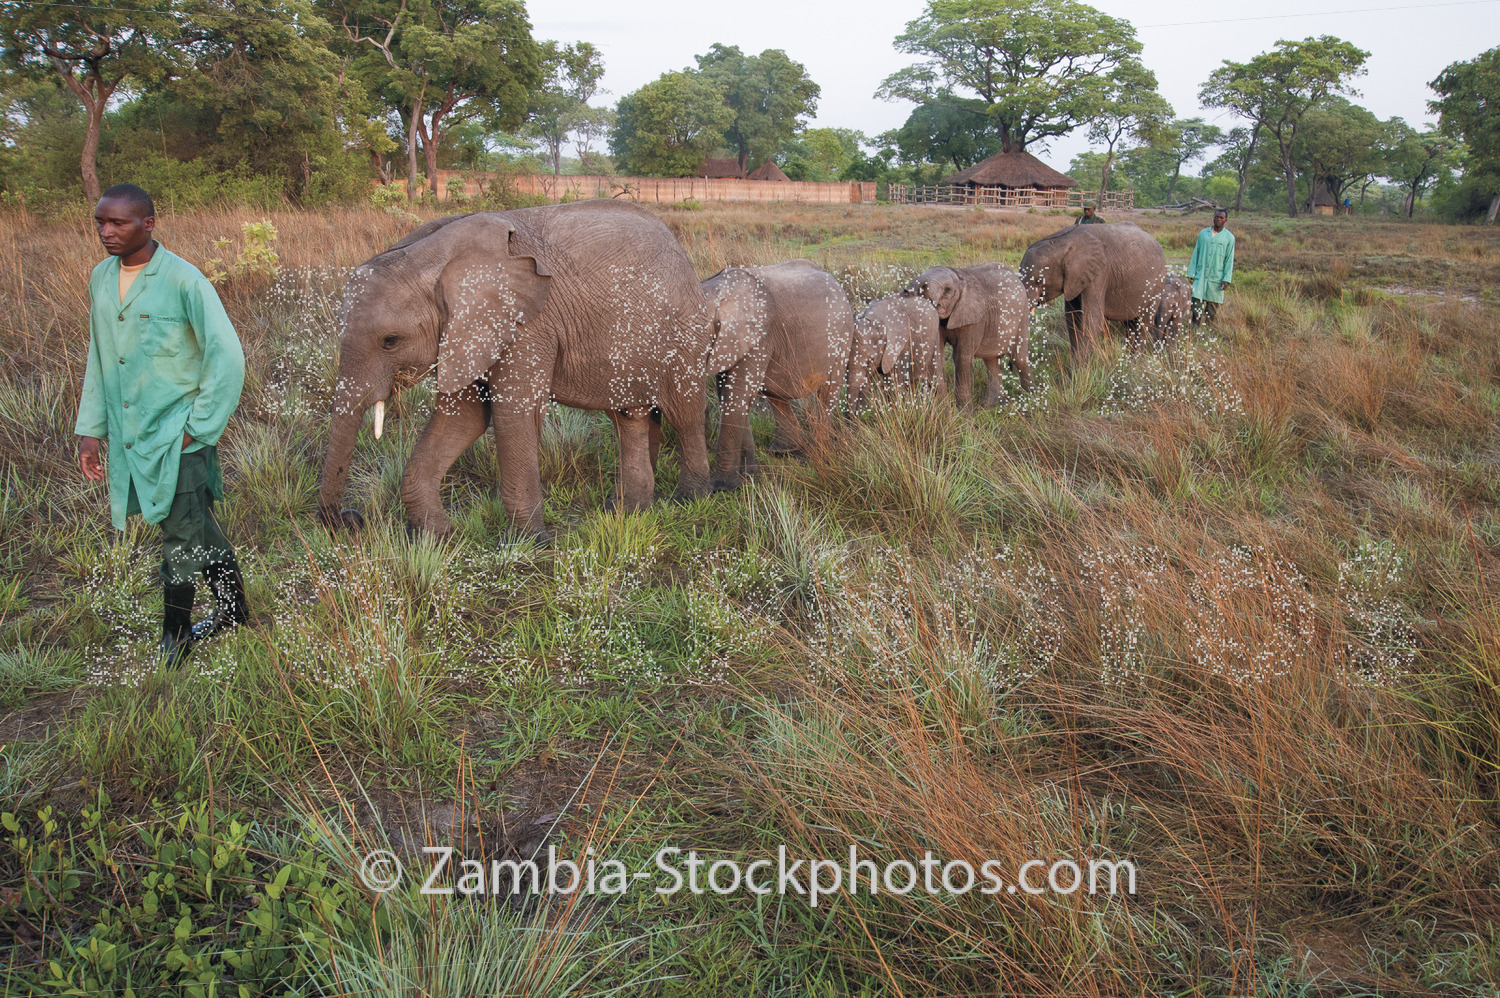 Elephant Orphanage 1 tiff.jpg - Zamstockphotos.com